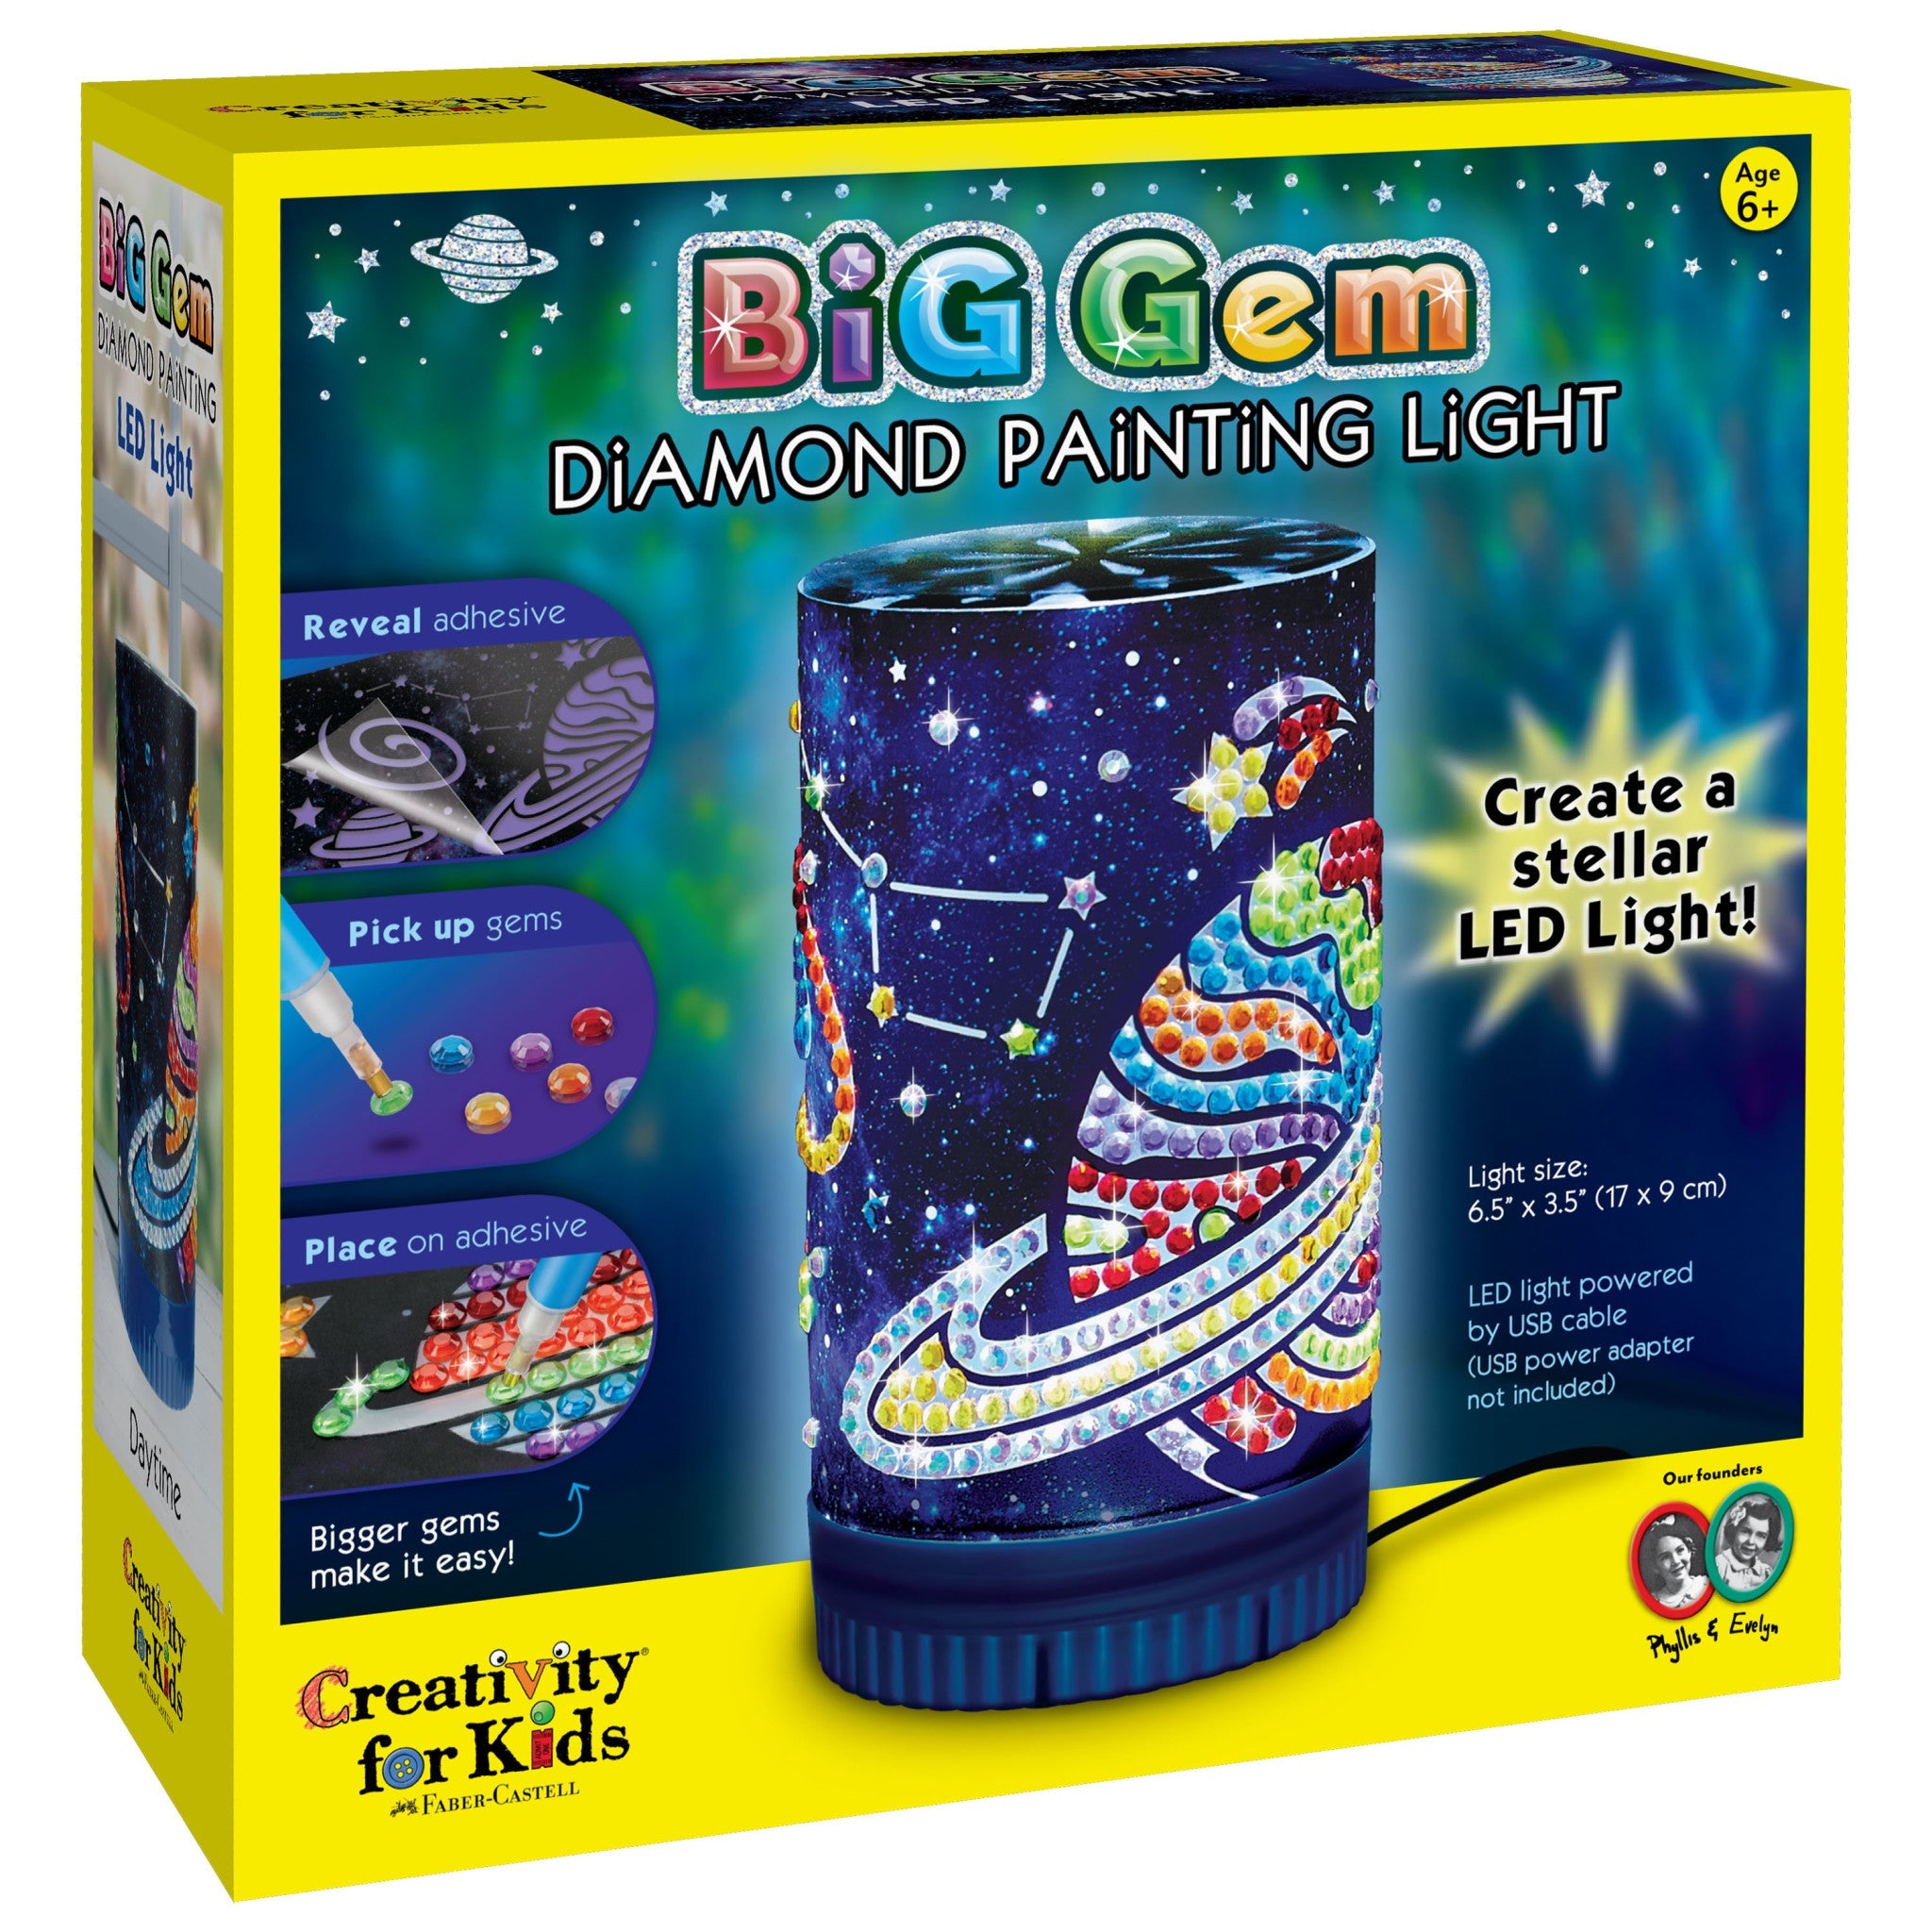 Big Gem Diamond Painting Light | Creativity For Kids